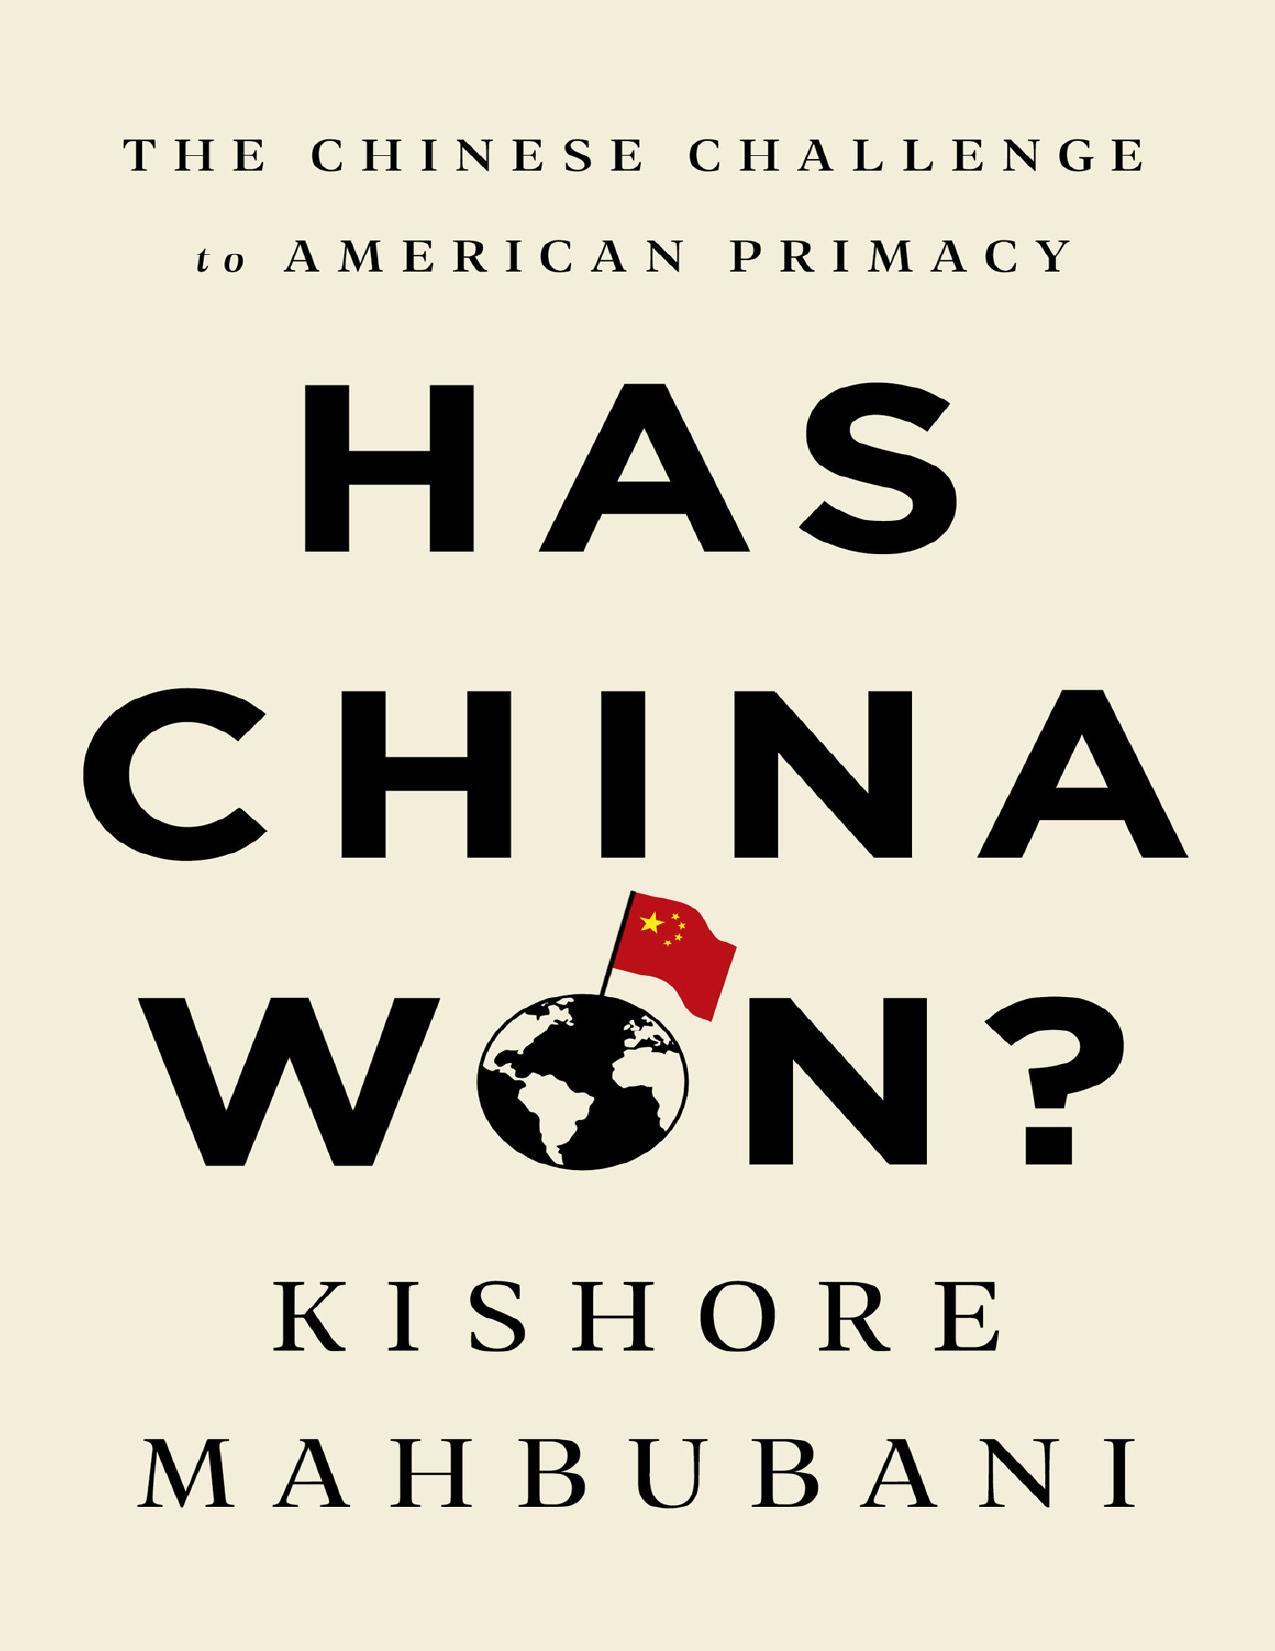 Has China Won The Chinese Challenge to American Primacy - Kishore Mahbubani.jpg